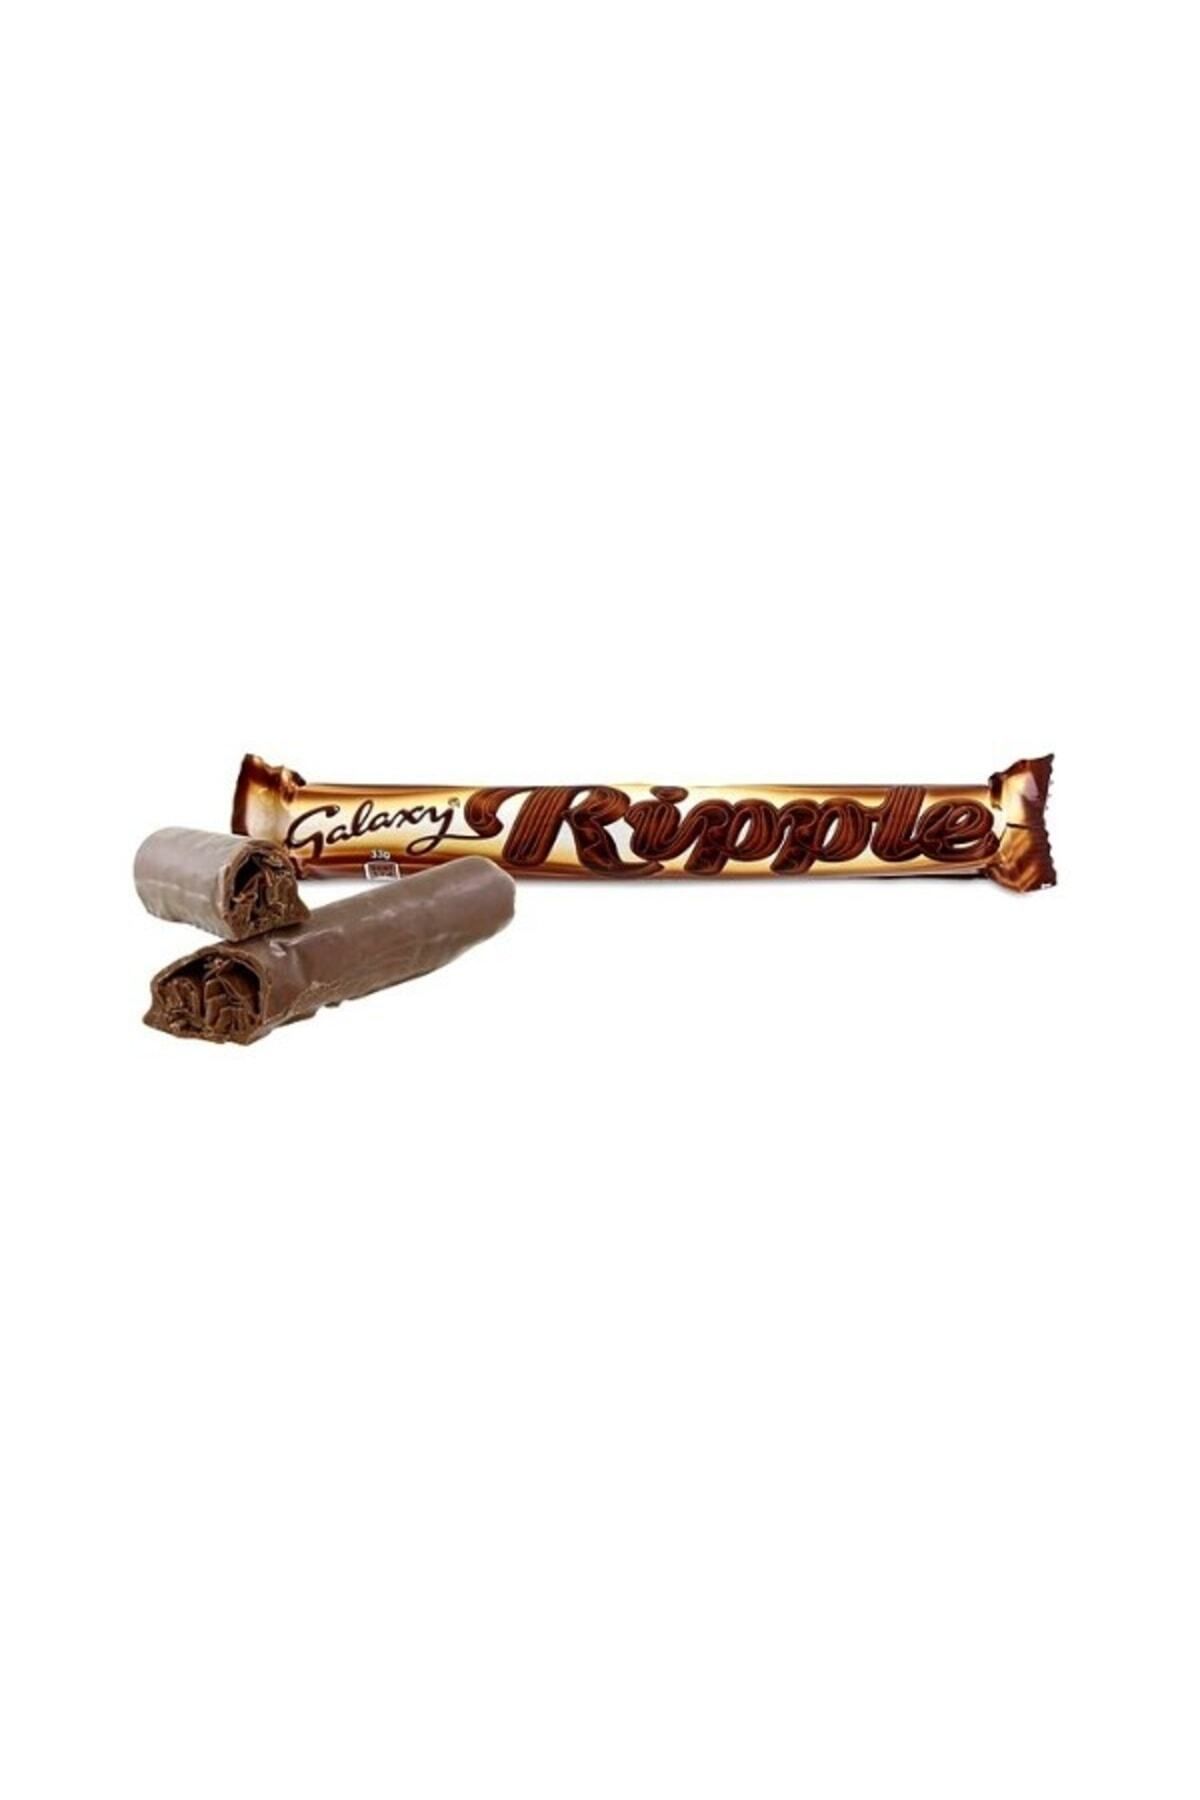 Galaxy Ripple Chocolate 33 G